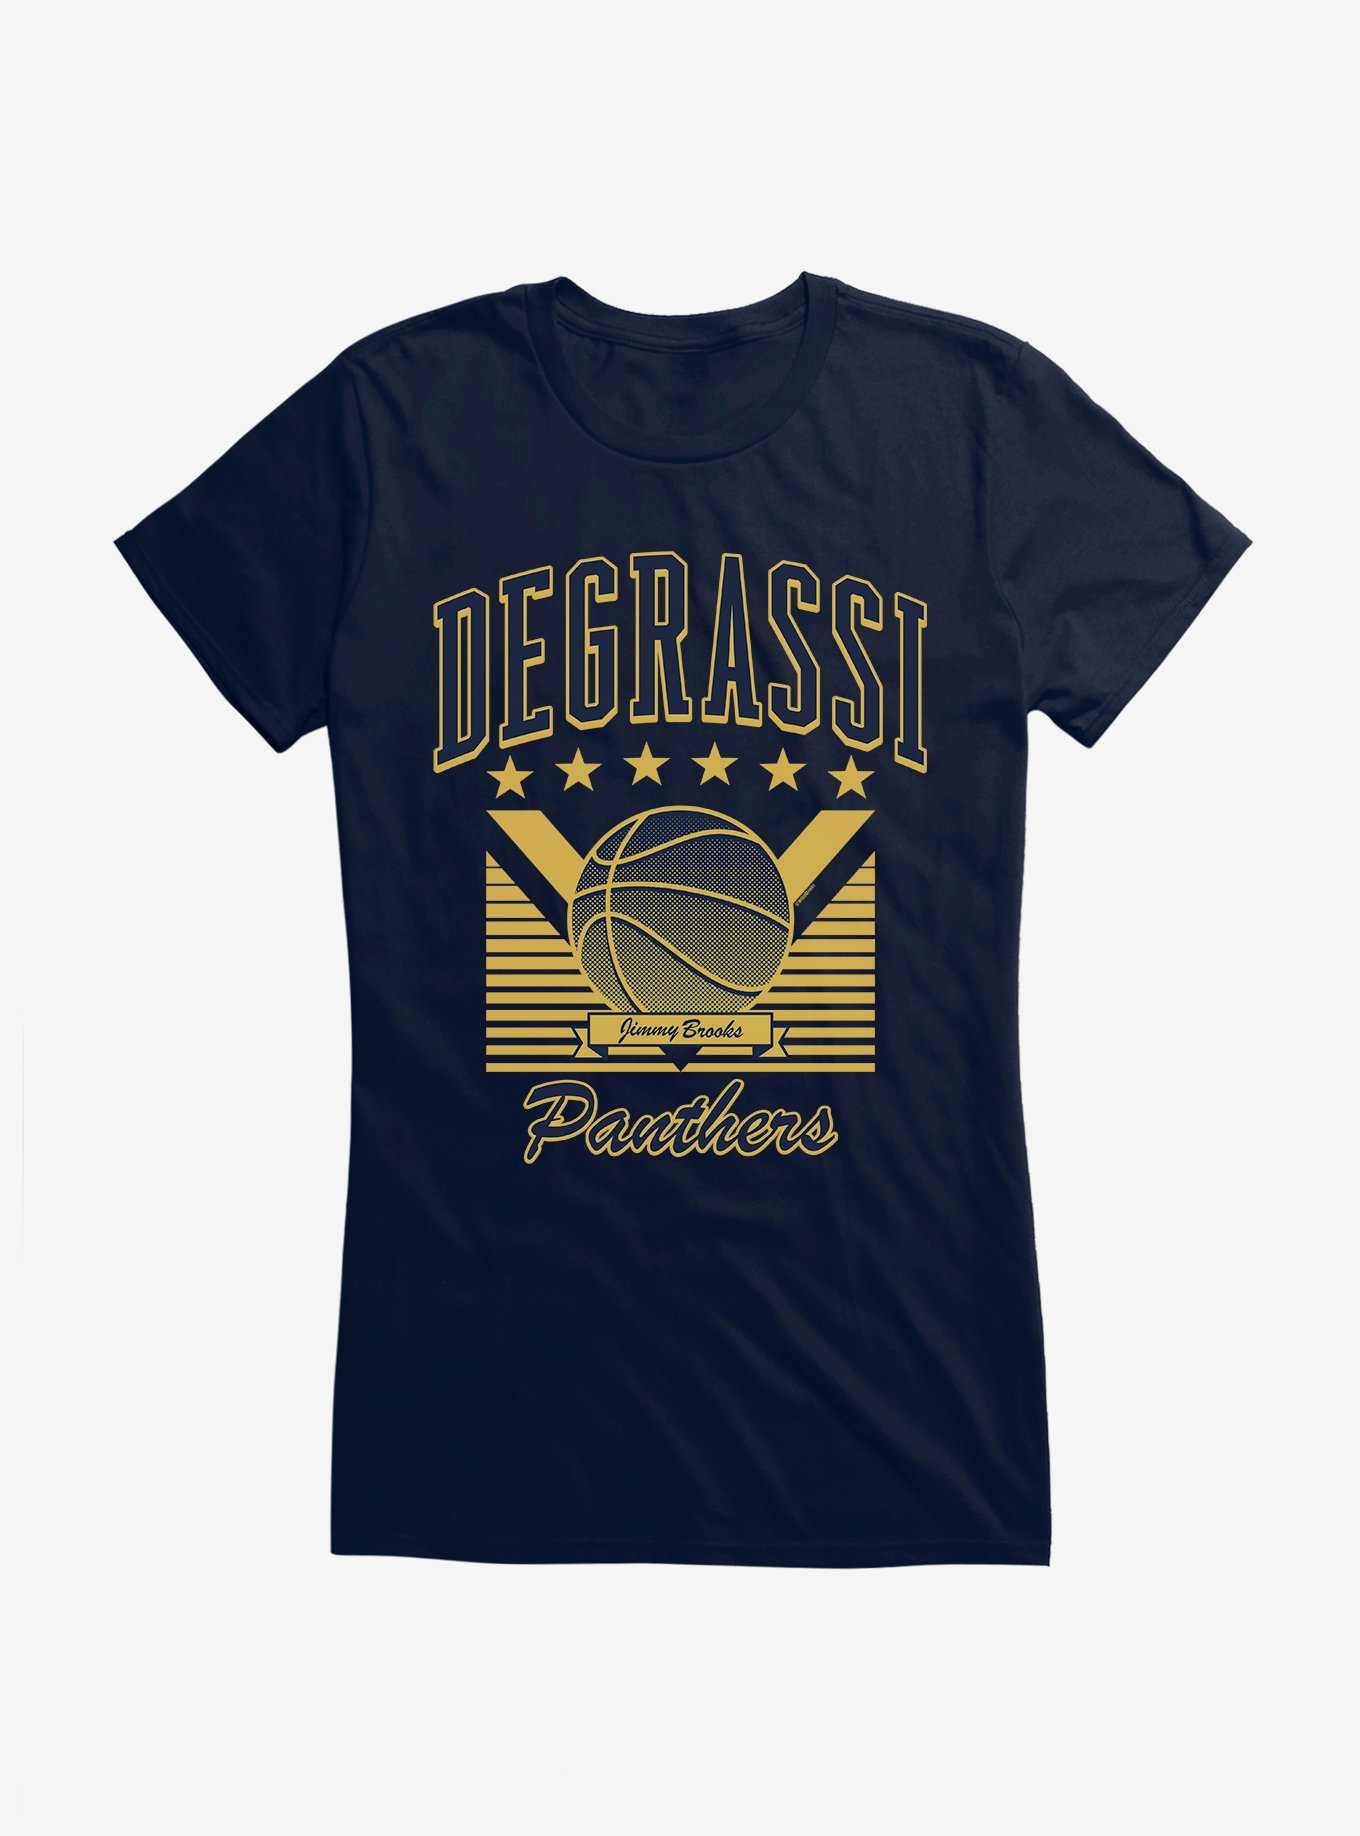 Degrassi: The Next Generation Degrassi Star Player Jimmy Brooks Girls T-Shirt, , hi-res